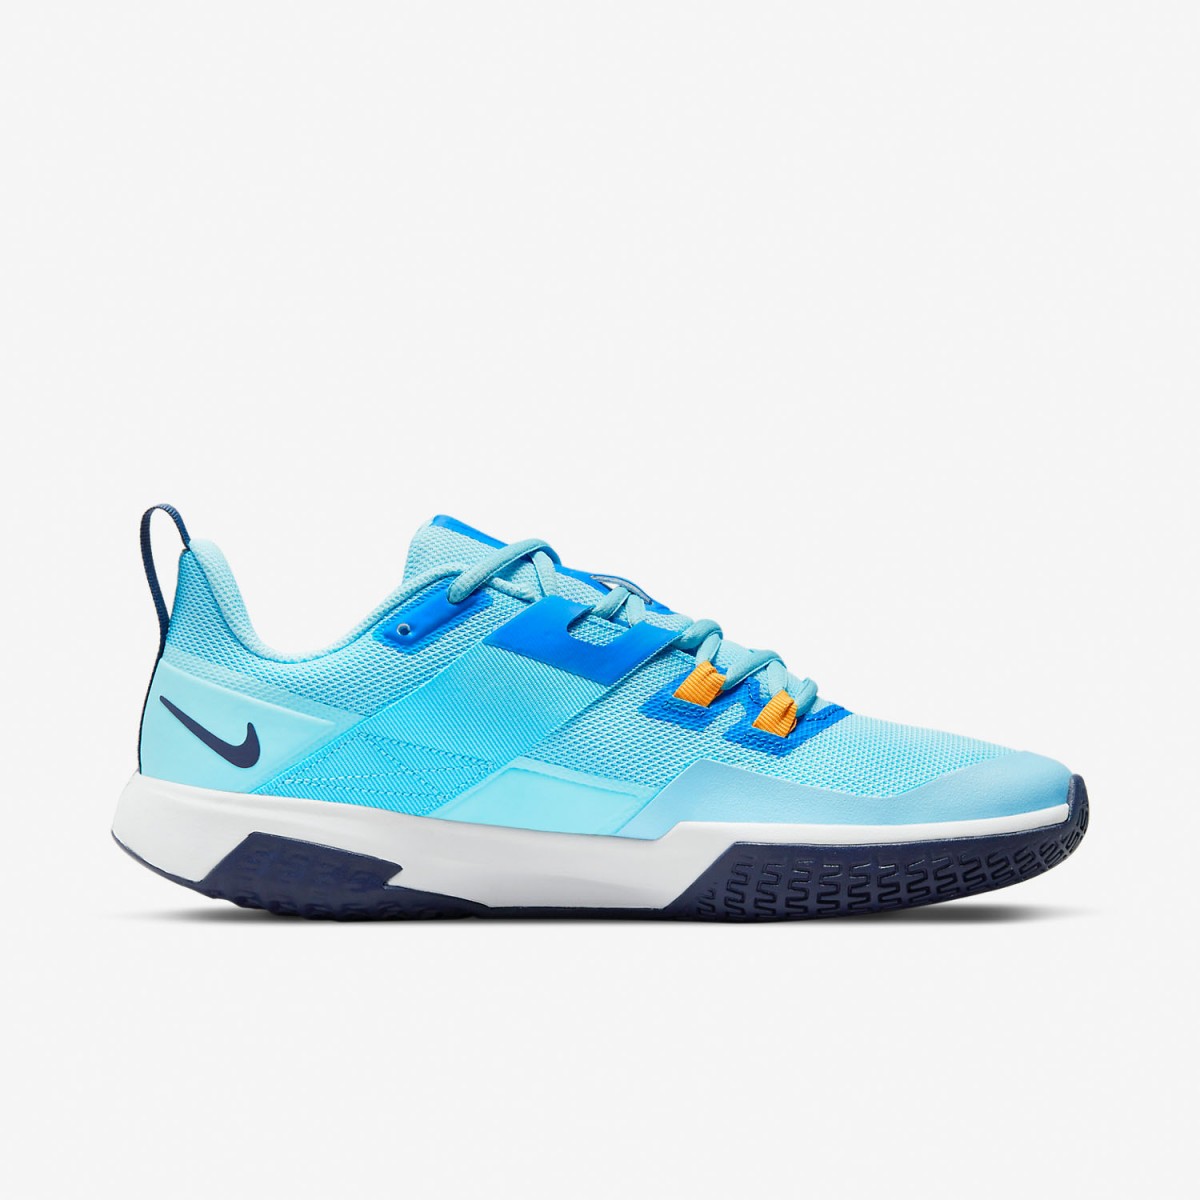 Теннисные кроссовки мужские Nike Court Vapor Lite blue chill/midnight navy/phantom white